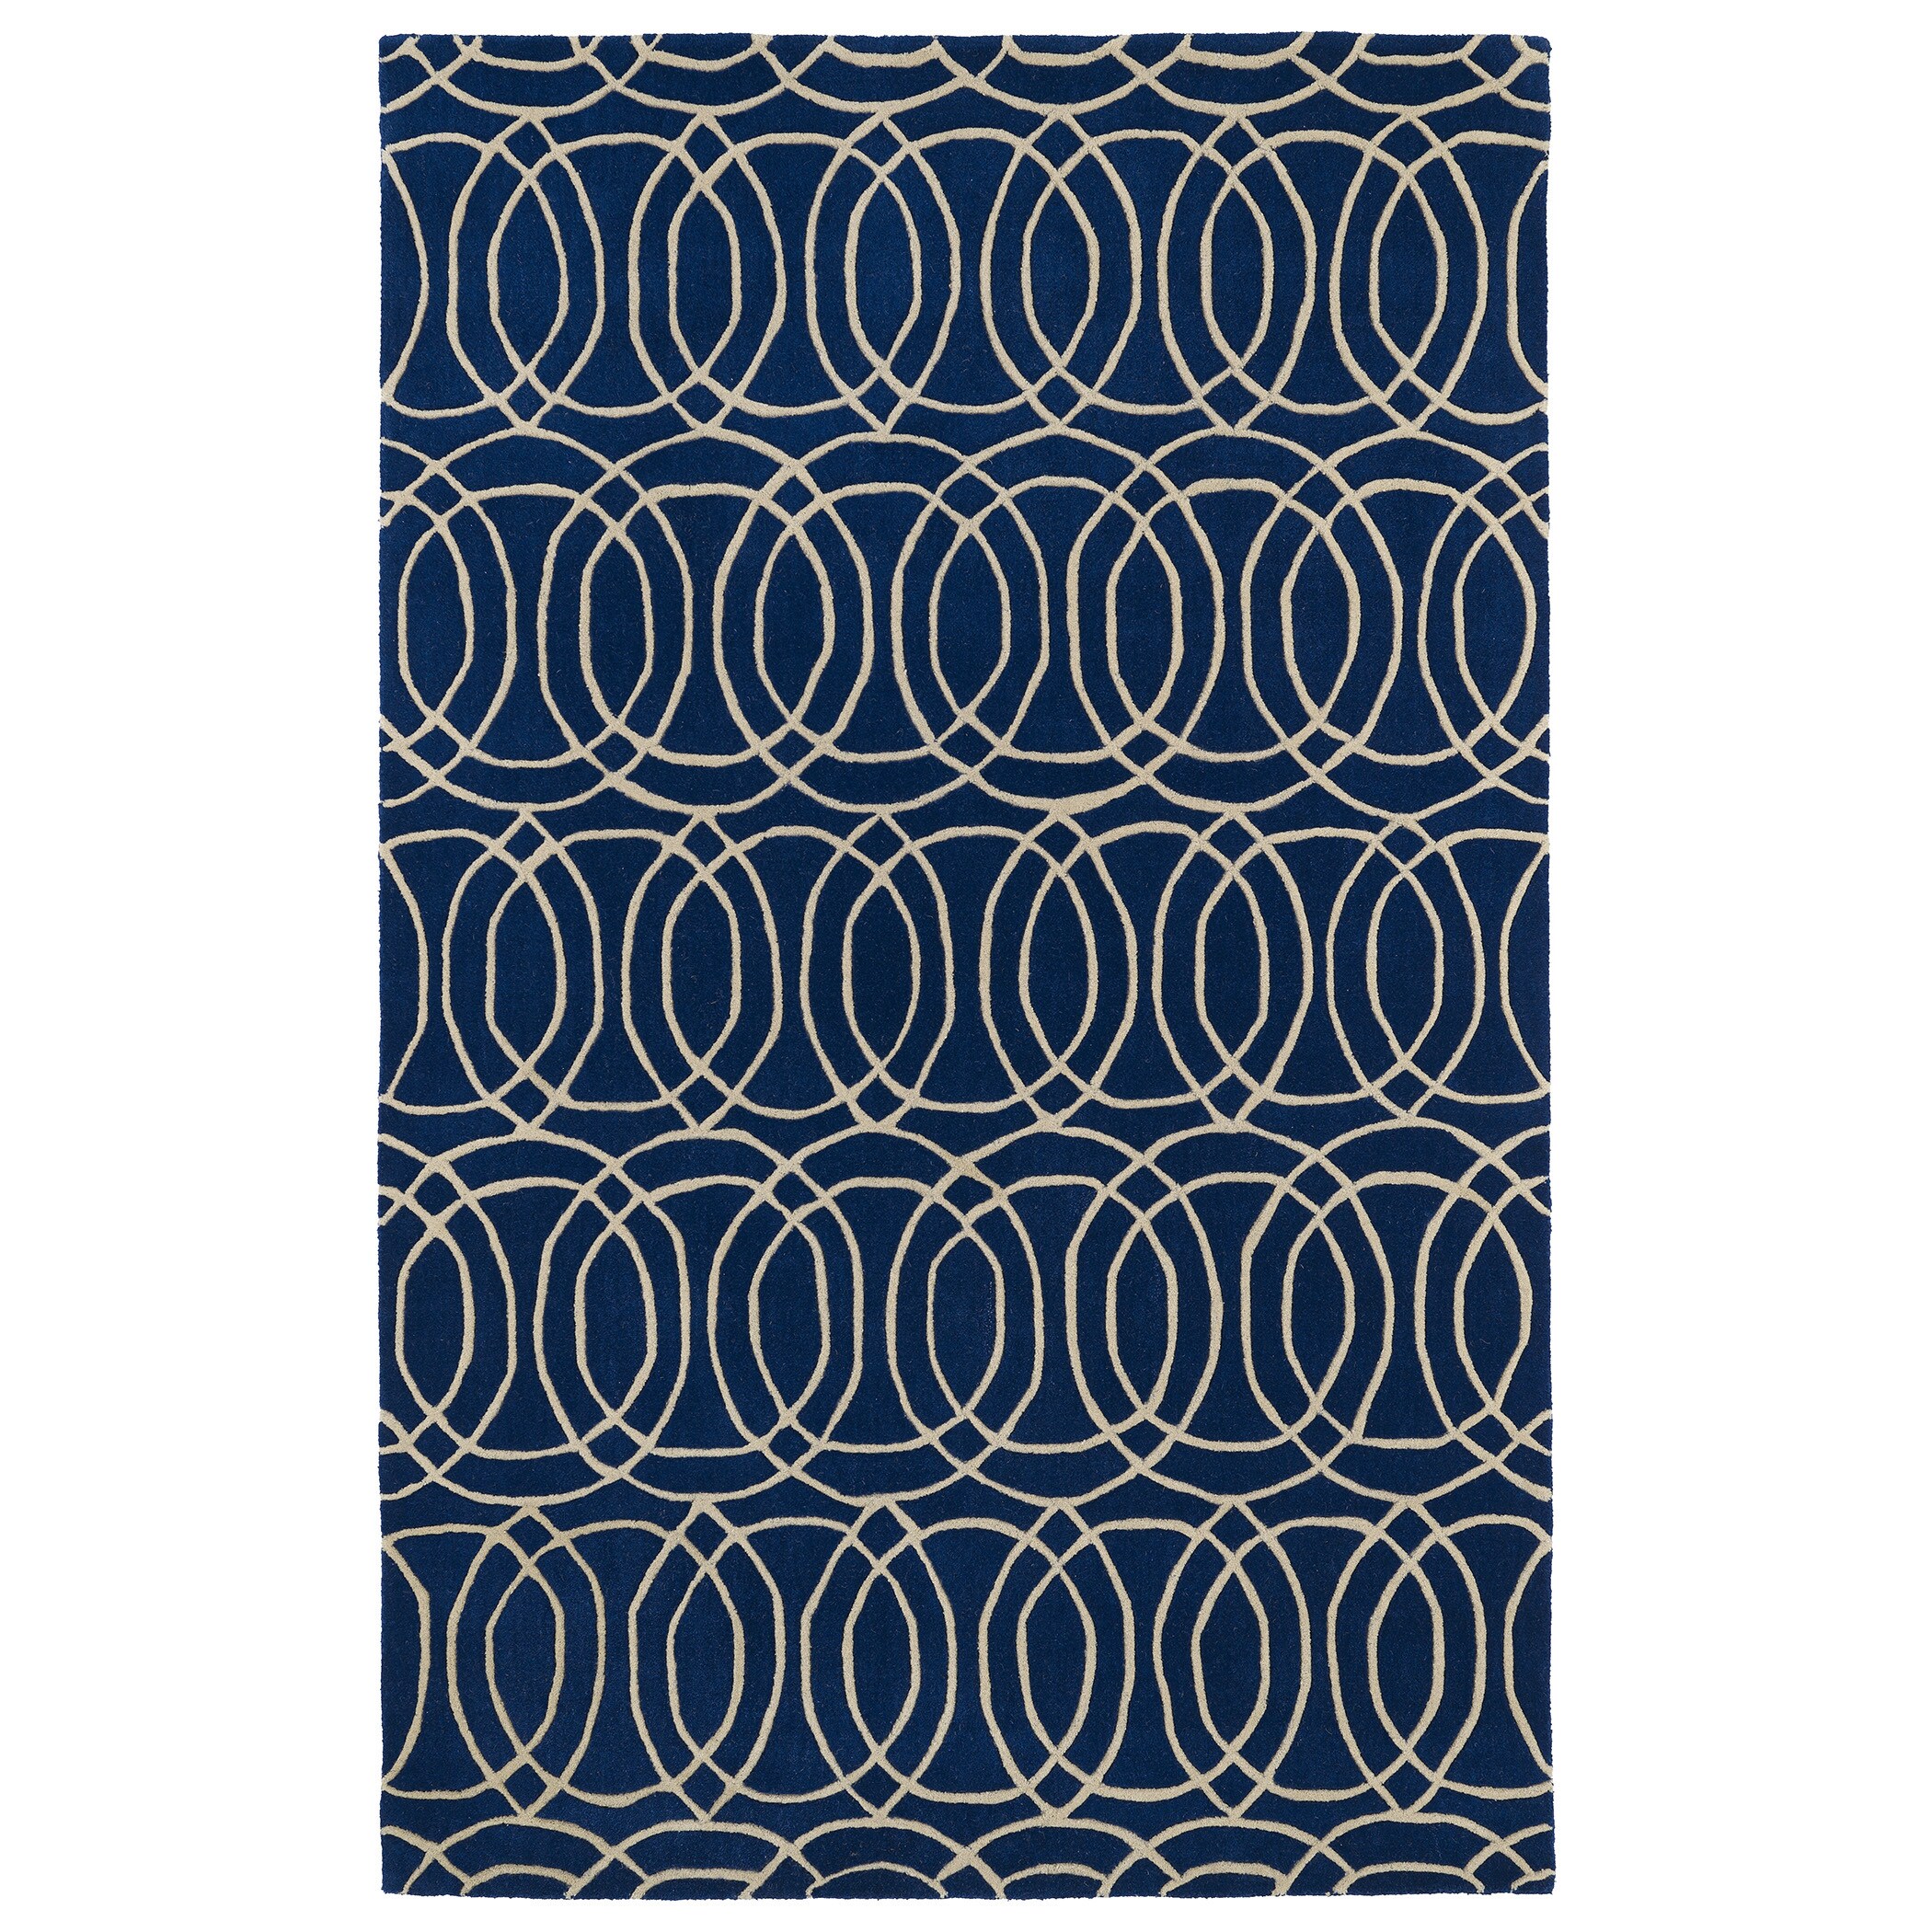 Kaleen Rugs Hand tufted Cosmopolitan Circles Navy/ Ivory Wool Rug (96 X 13) Blue Size 96 x 13